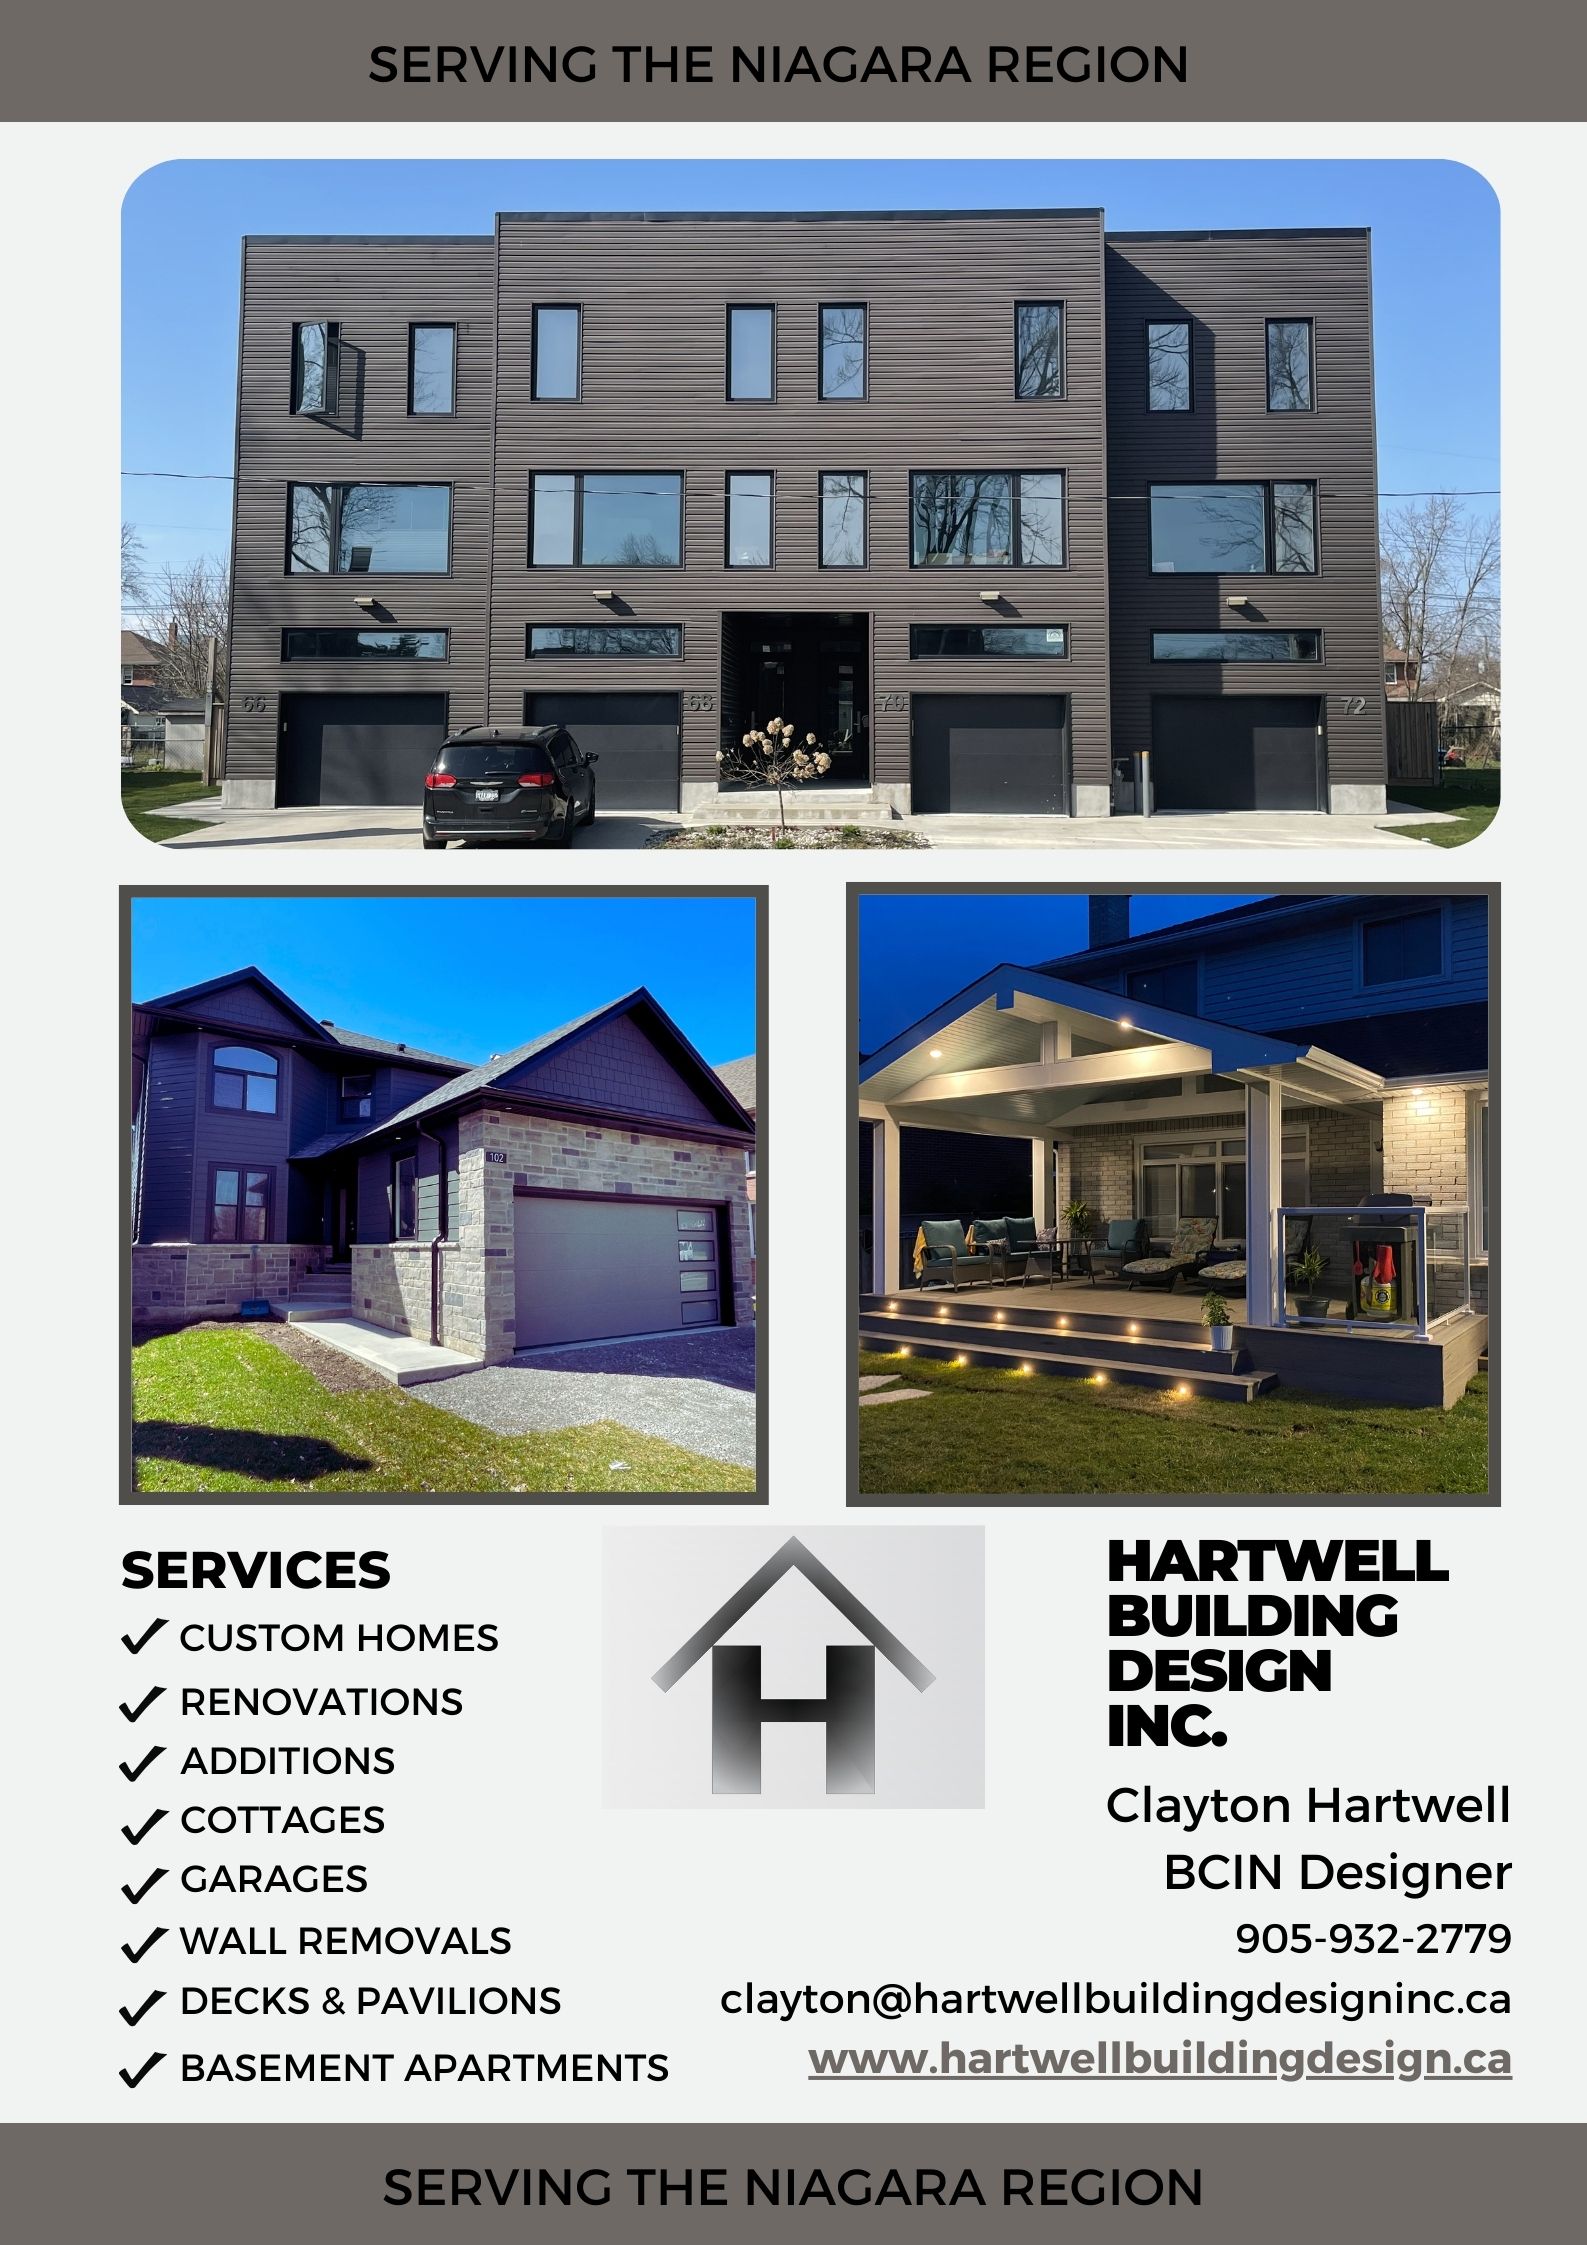 Hartwell Building Design